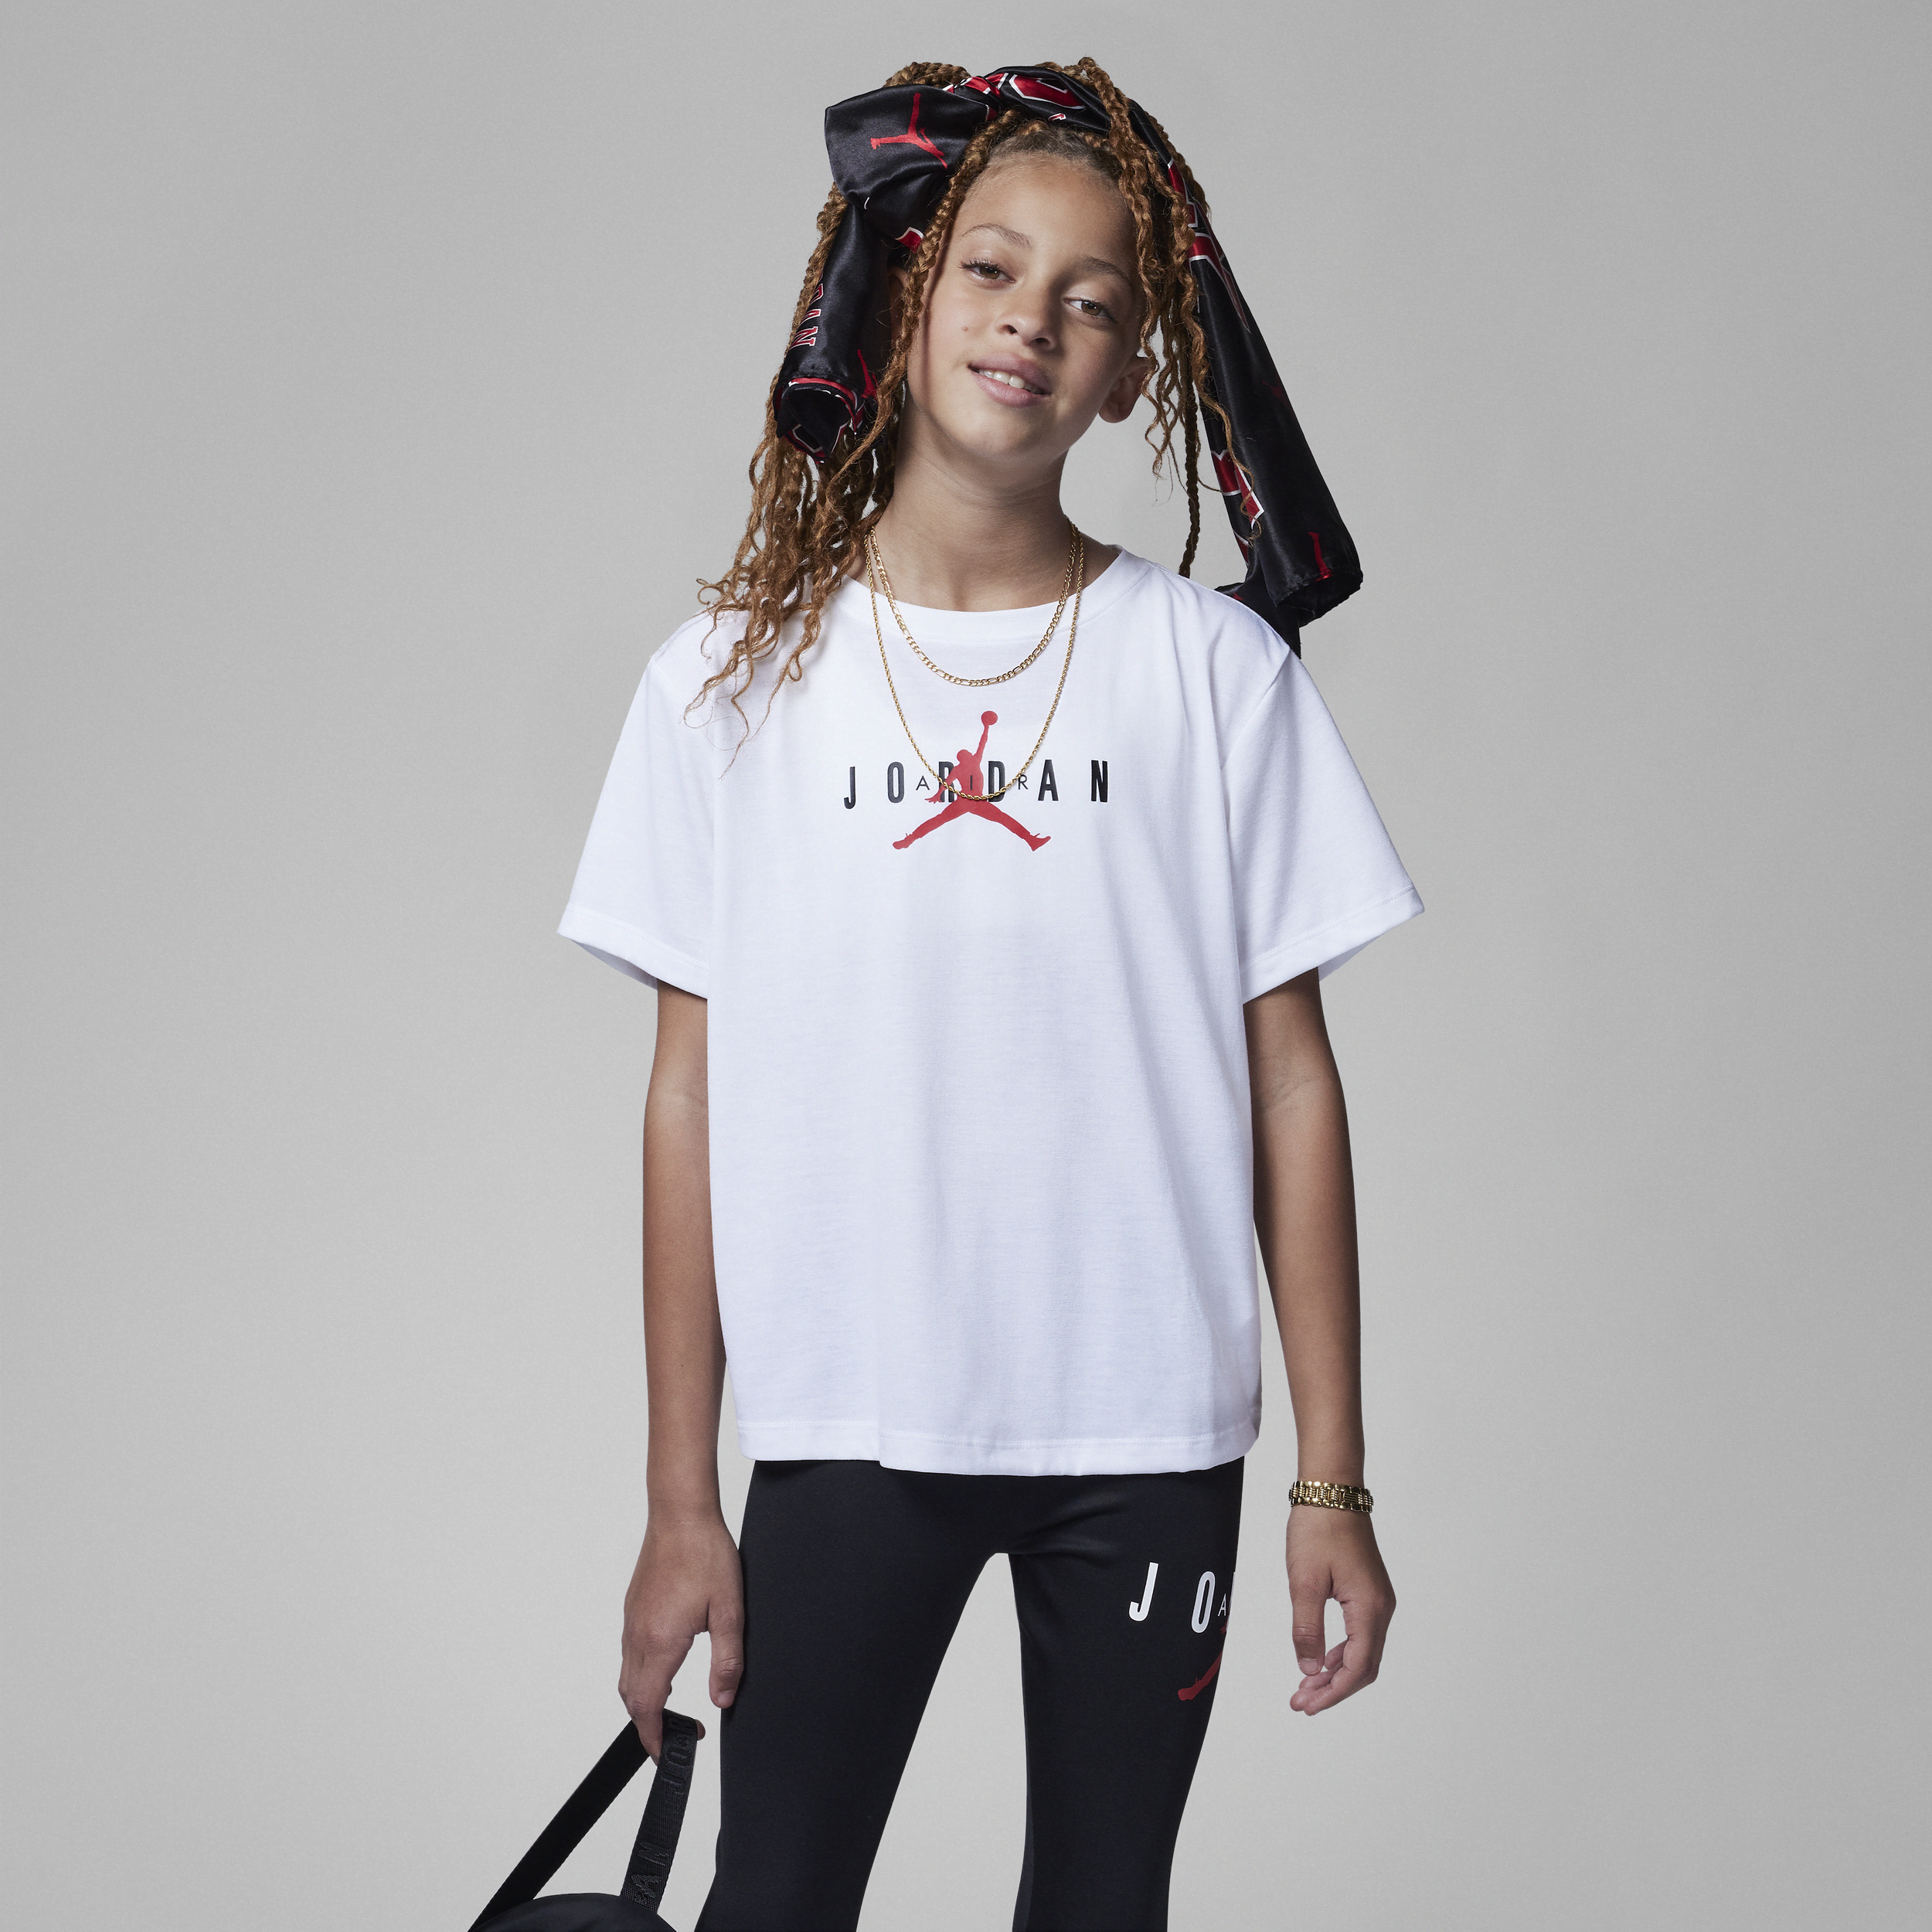 Jordan Camiseta - Niño/a - Blanco